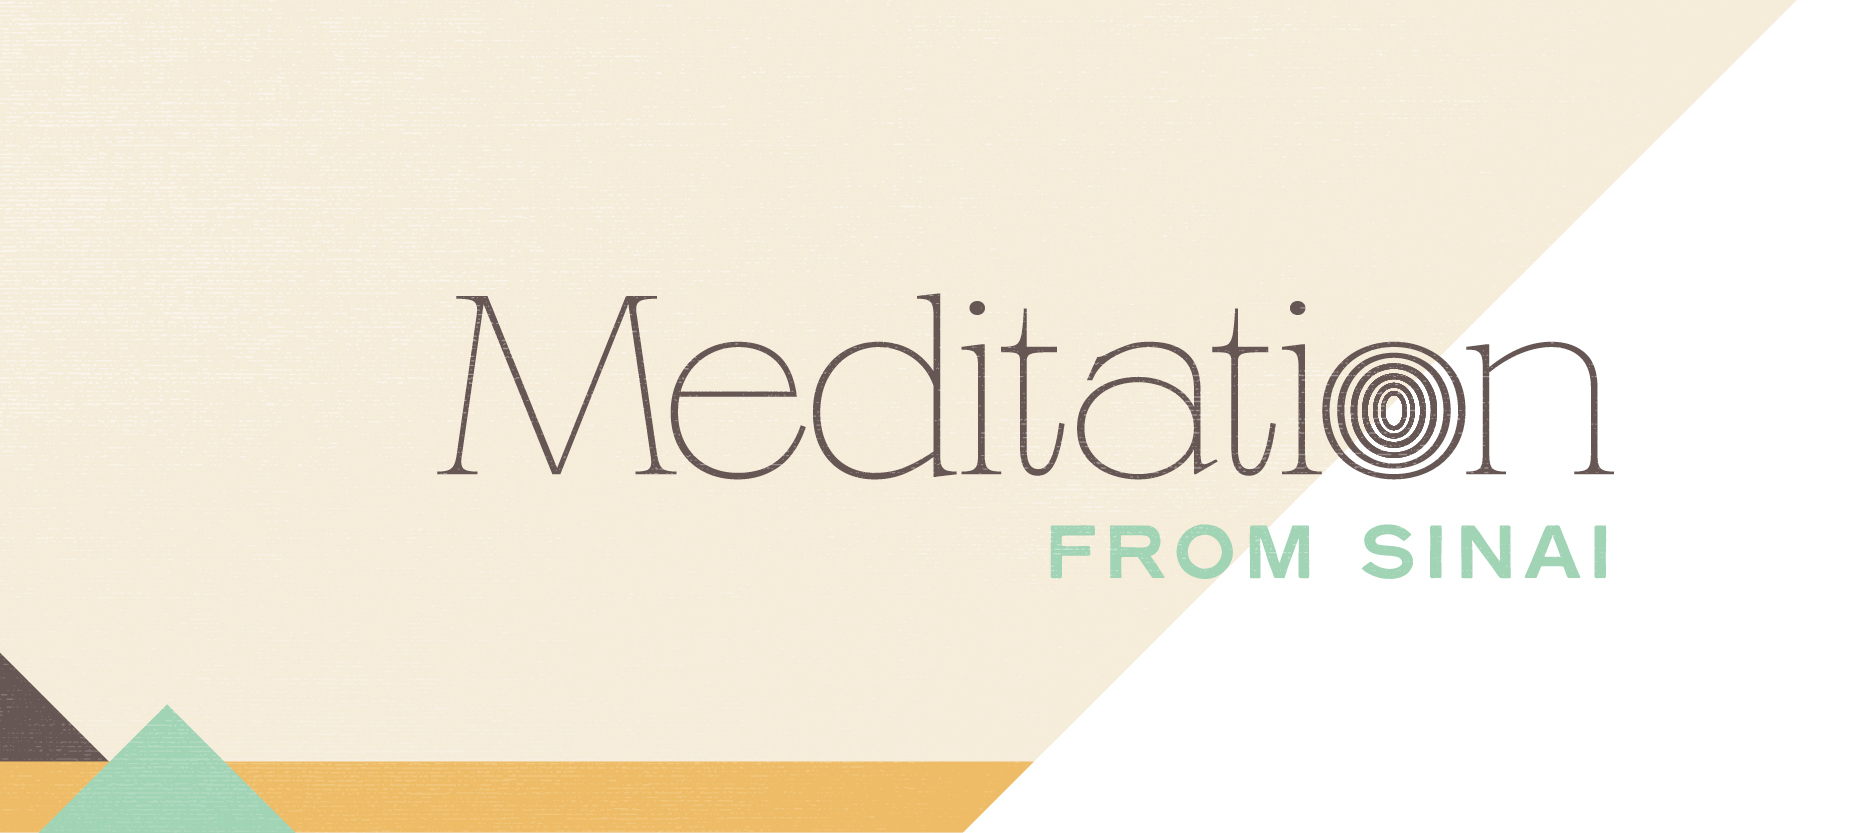 Meditation from Sinai